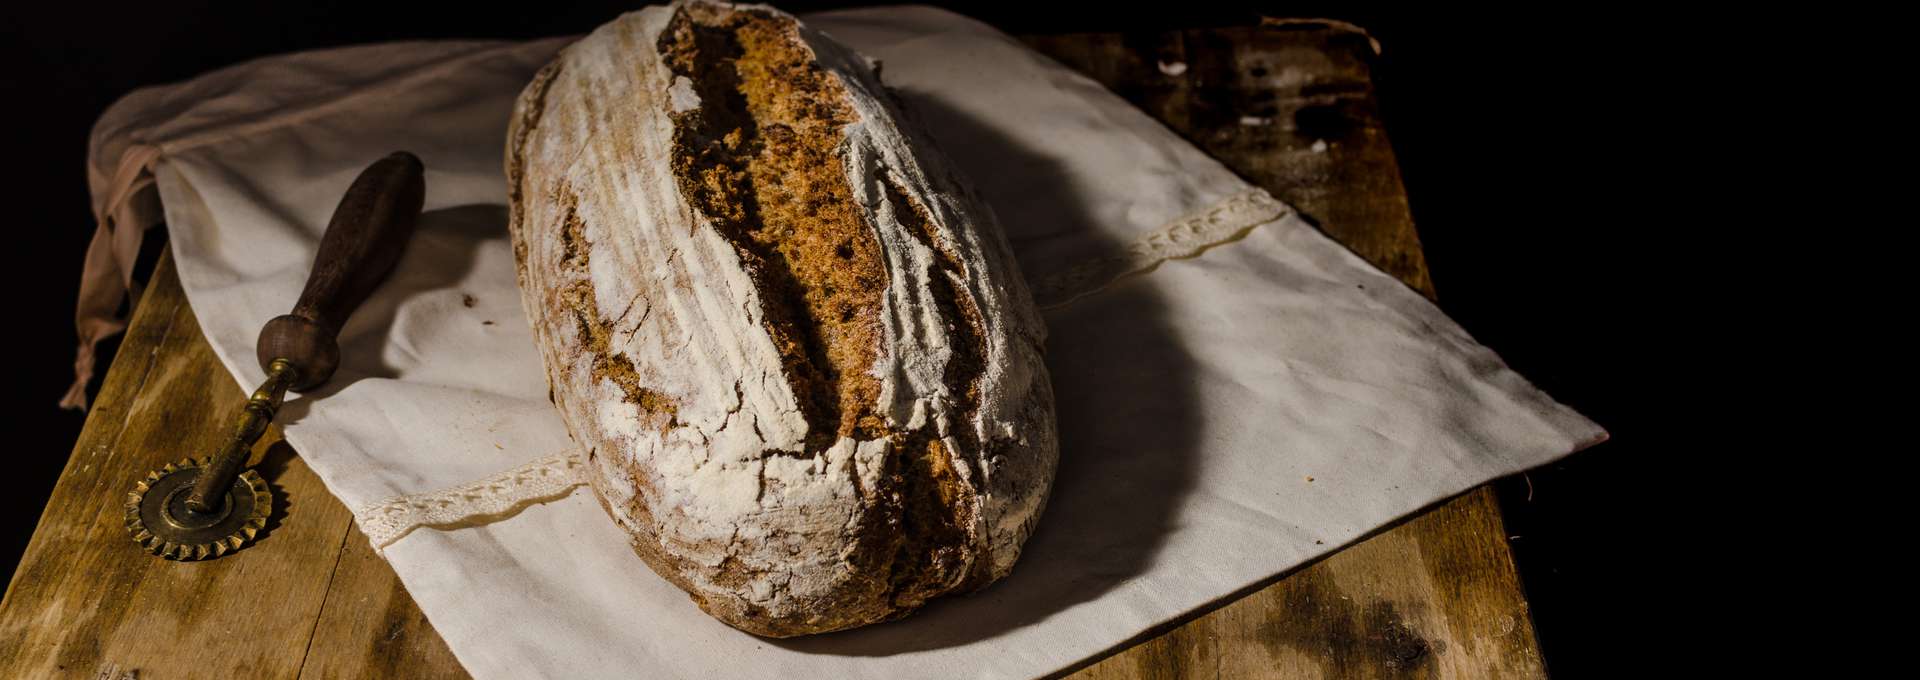 Homemade bread rustic sourdough, in chef hands